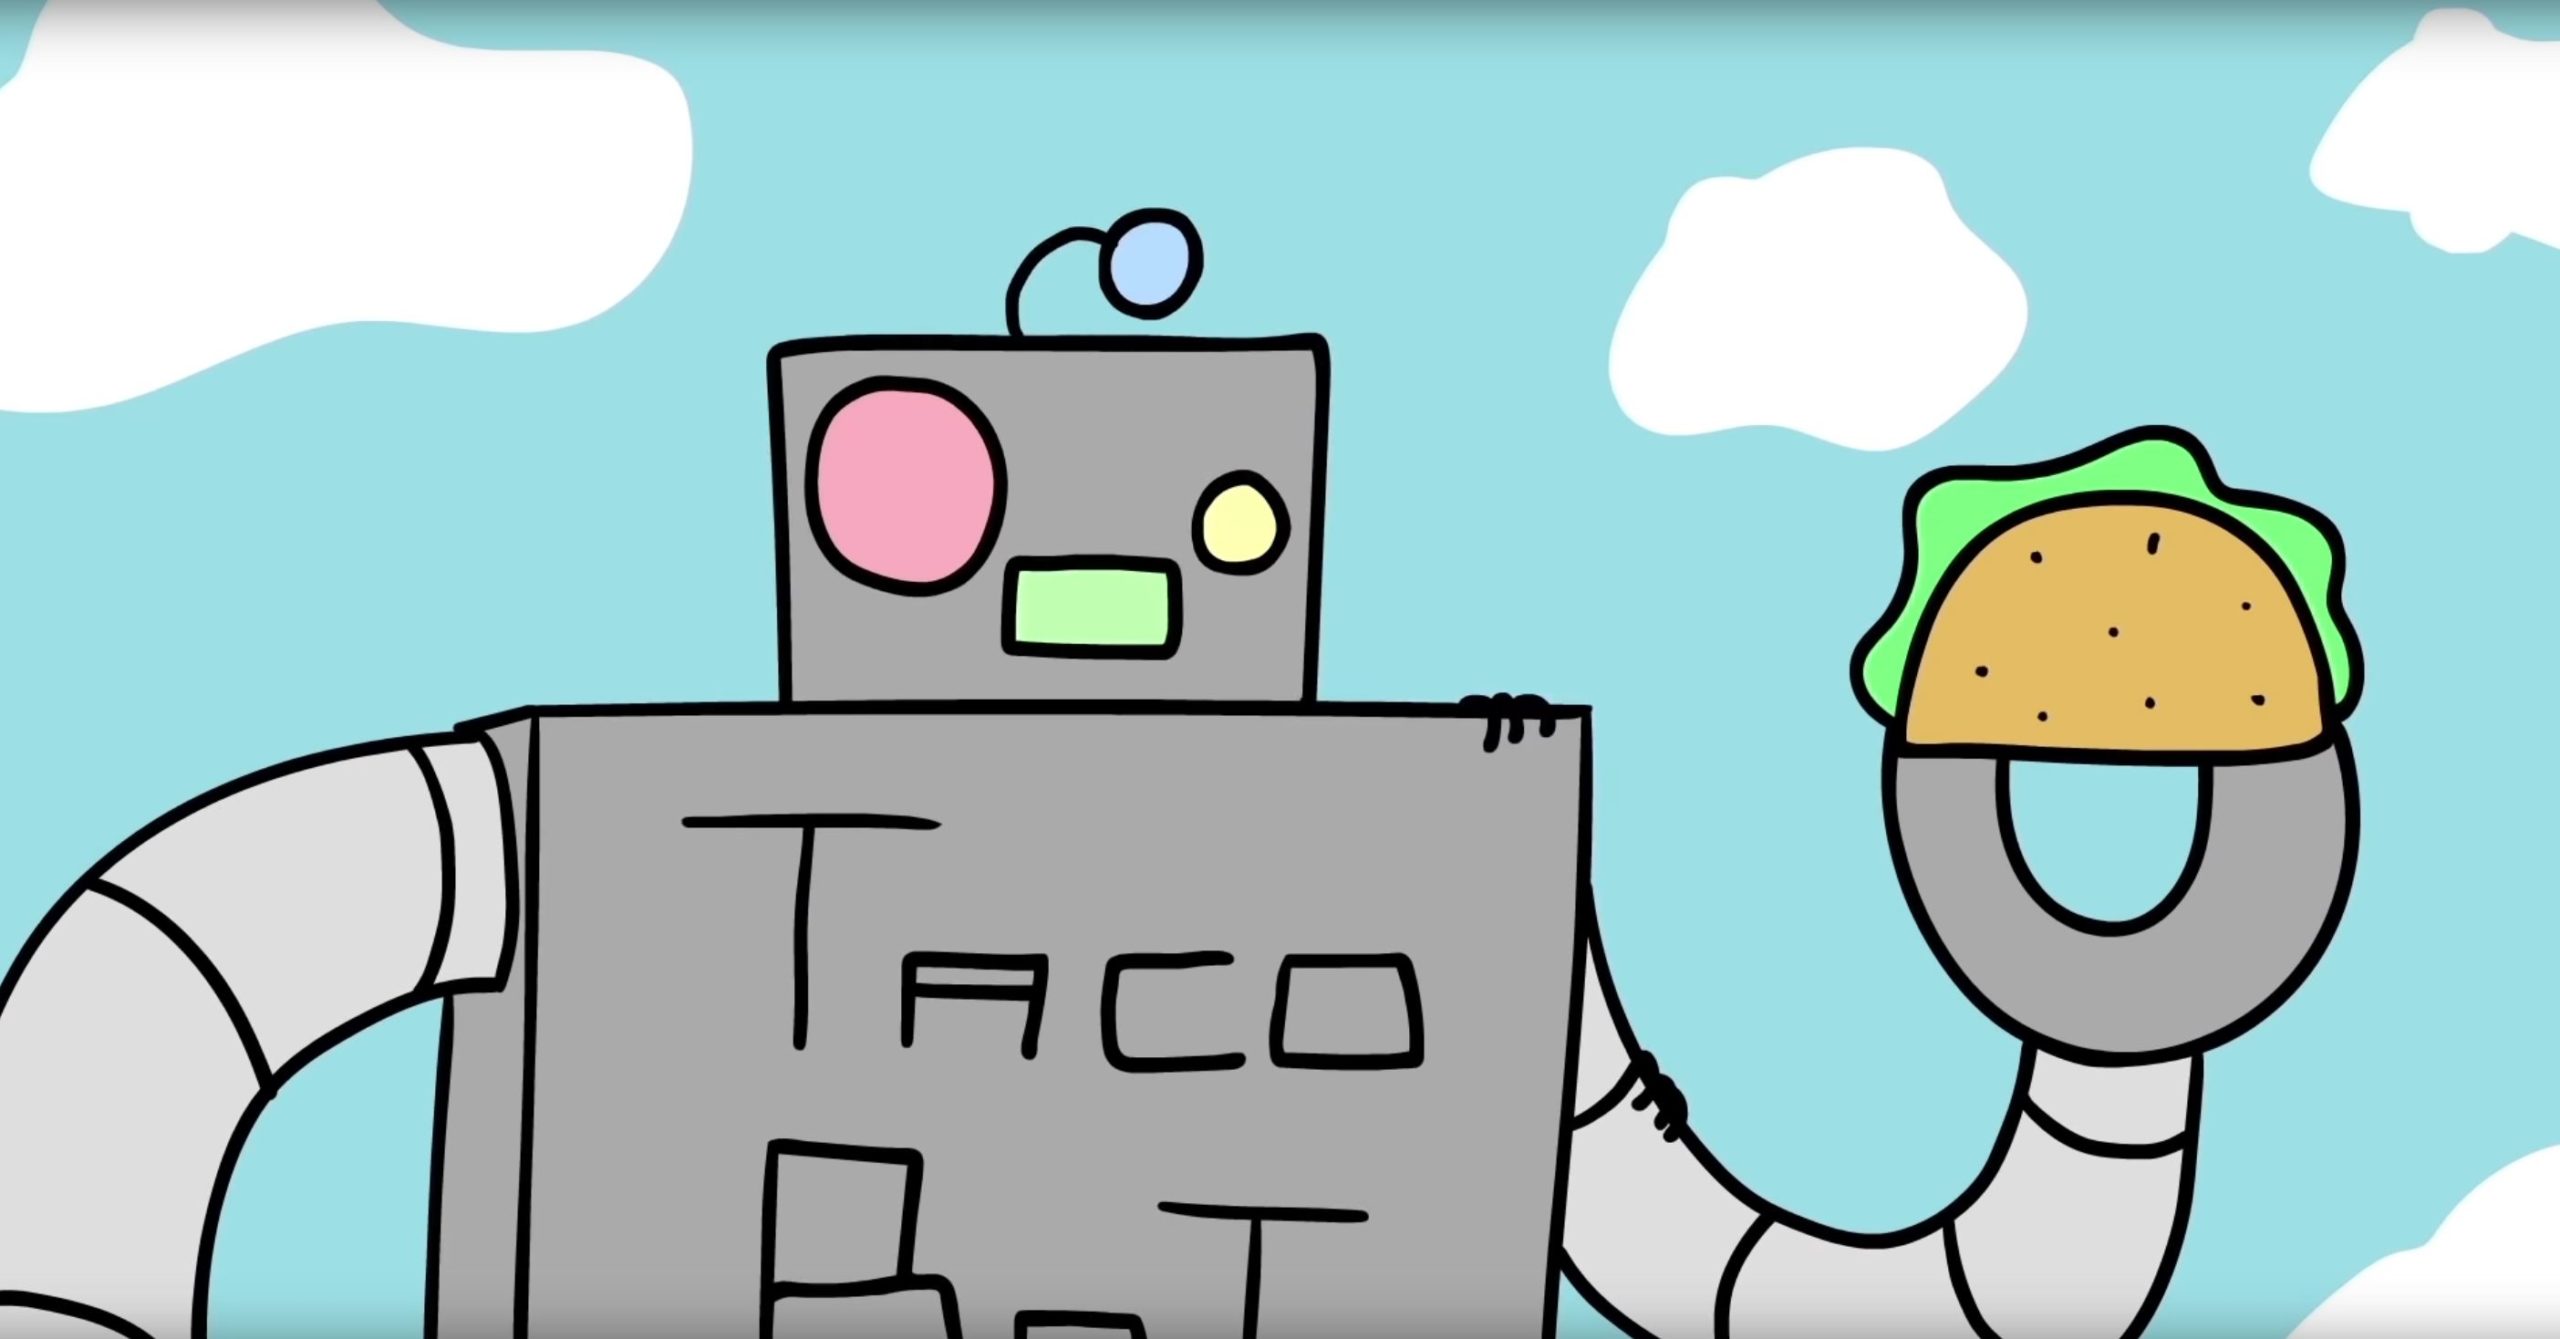 Taco Bot